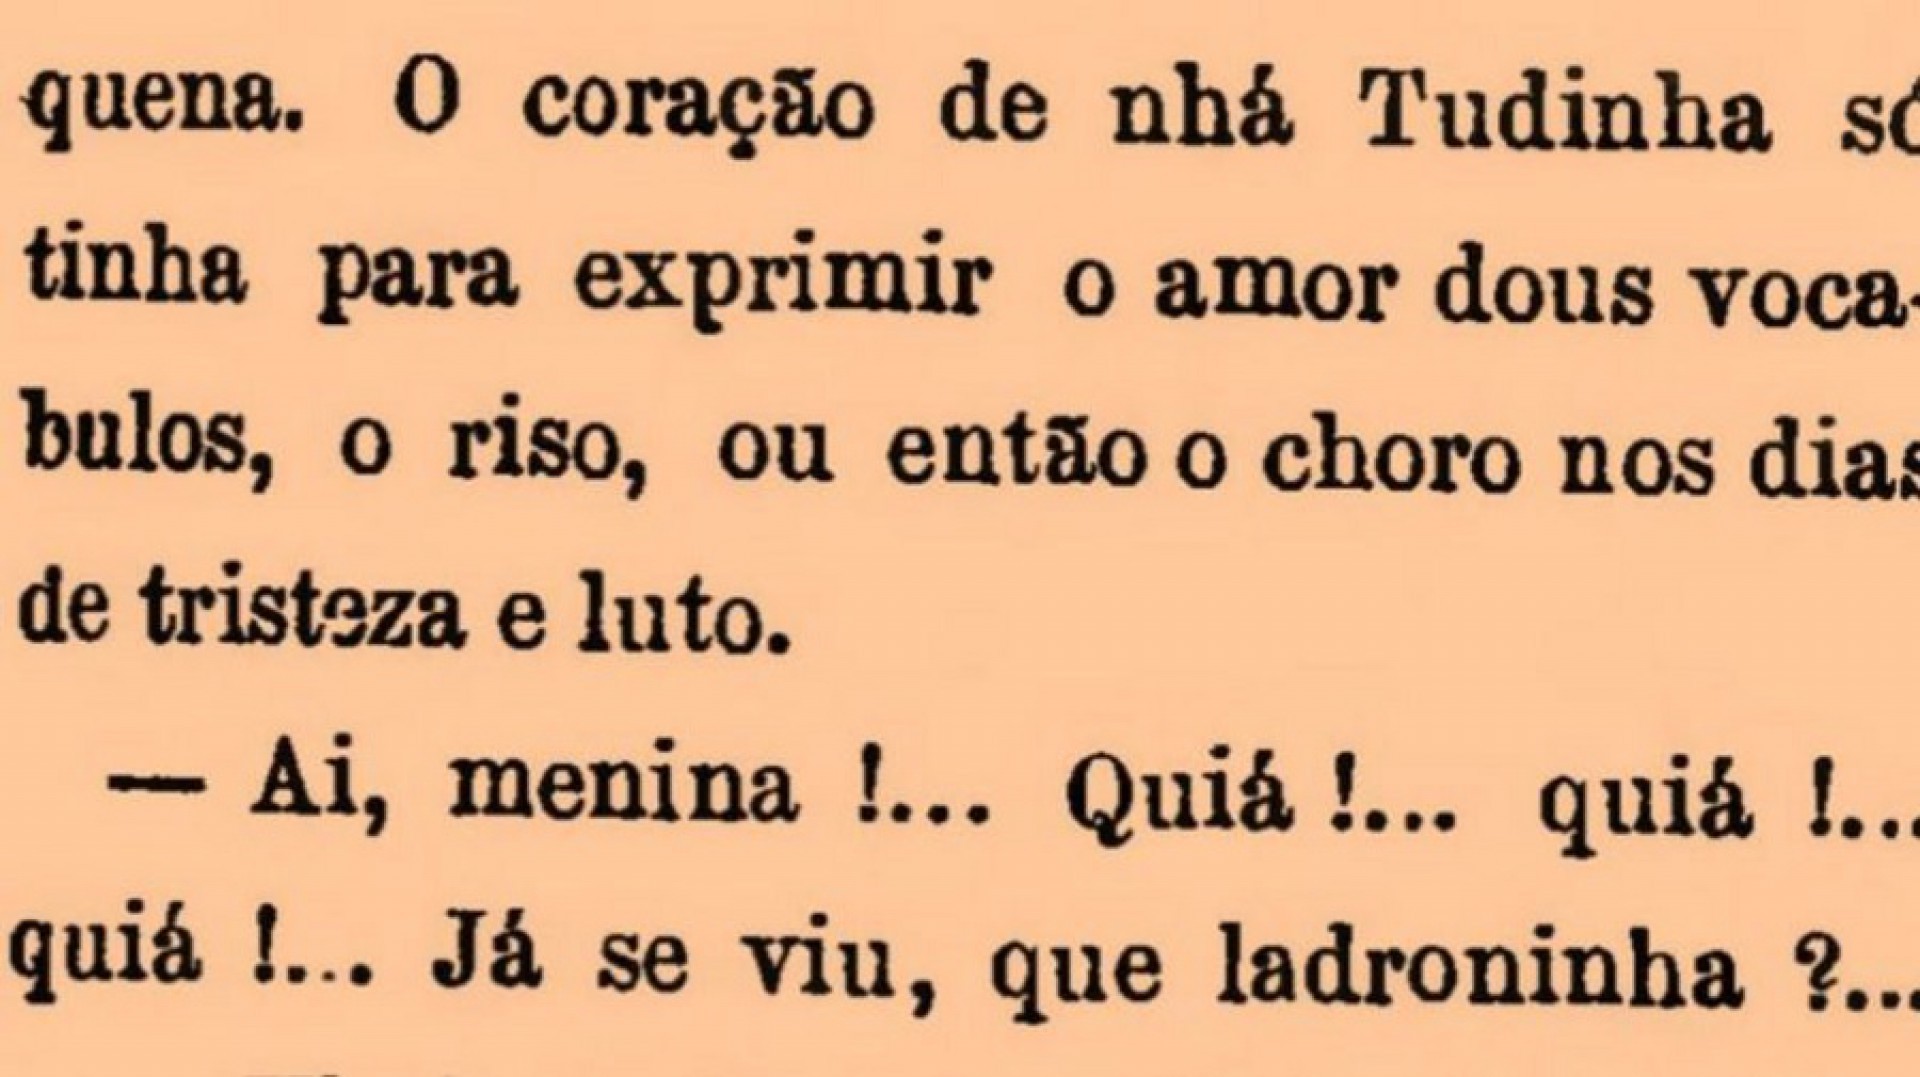 Trecho do livro "Til" (1872), de José de Alencar